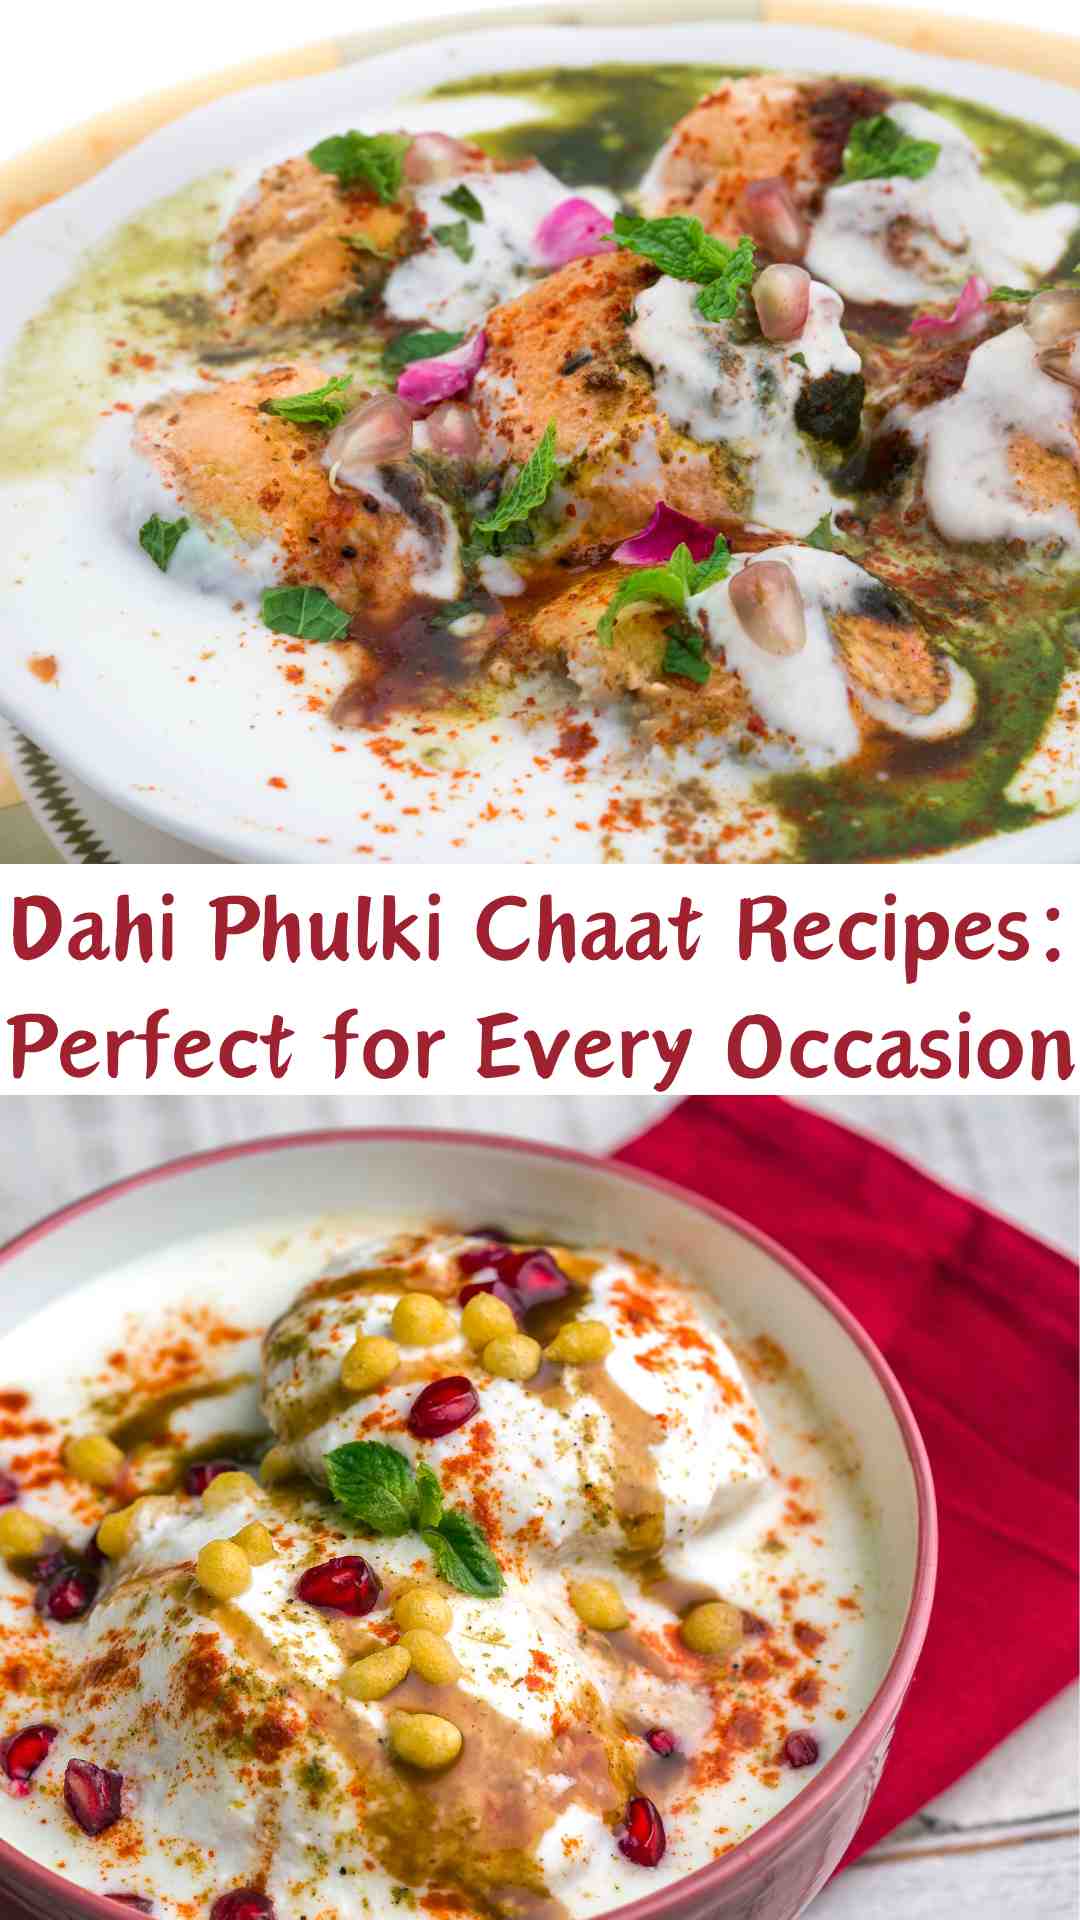 Dahi Phulki Chaat Recipes